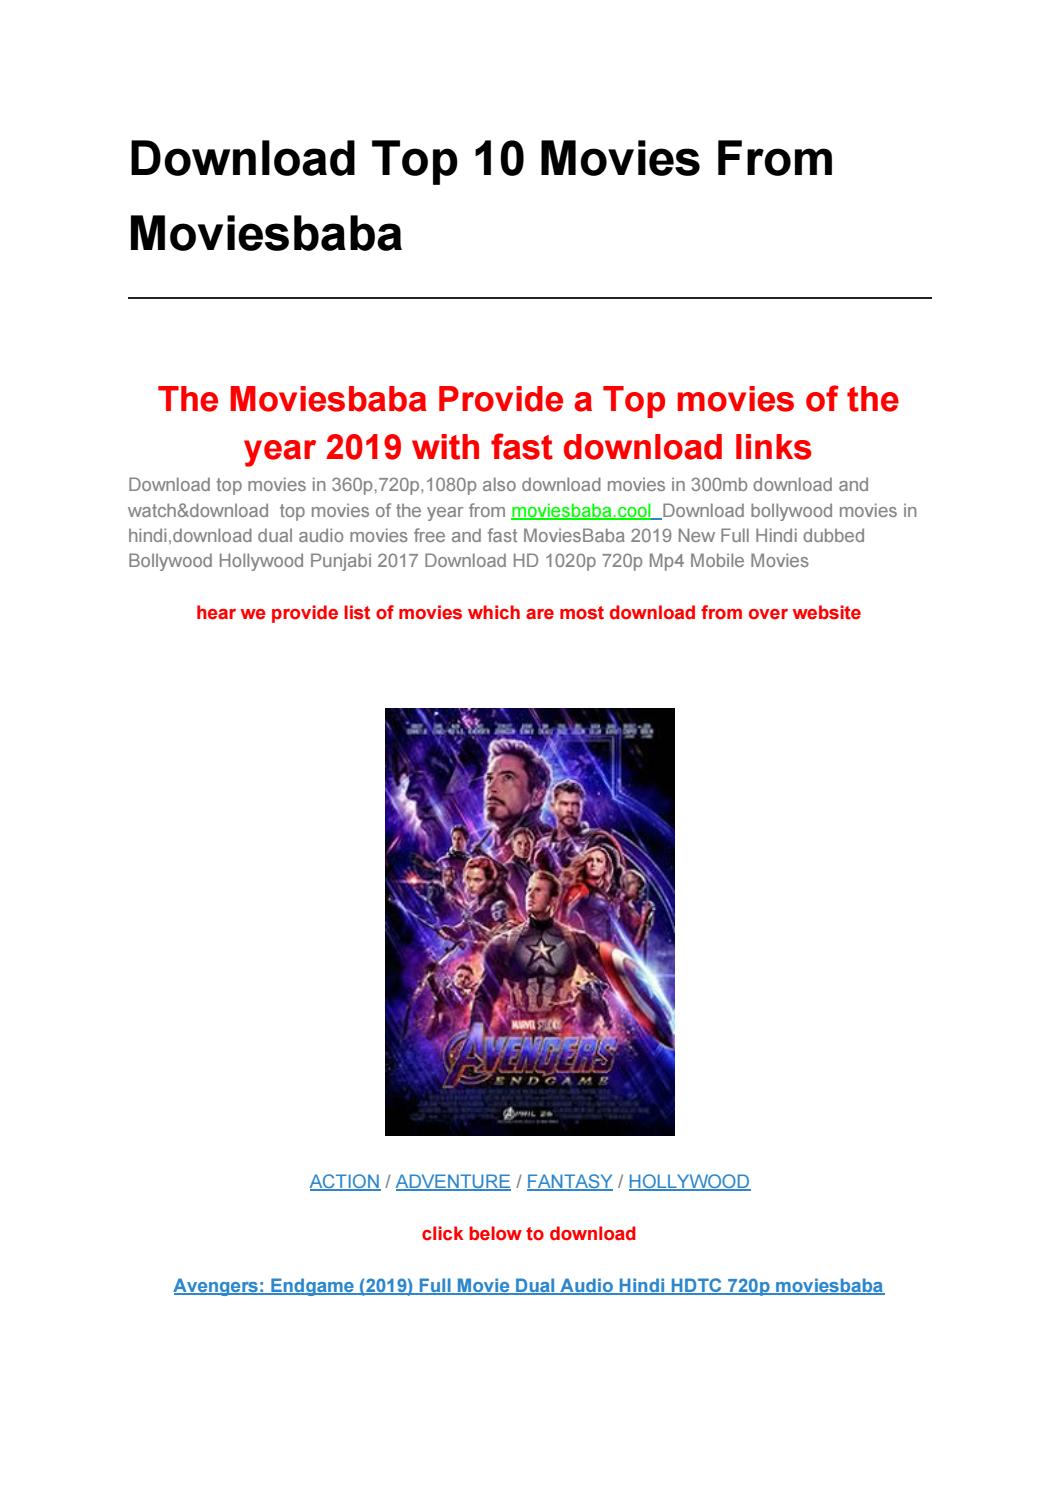 Download movies4me cc Movie4me 2020: